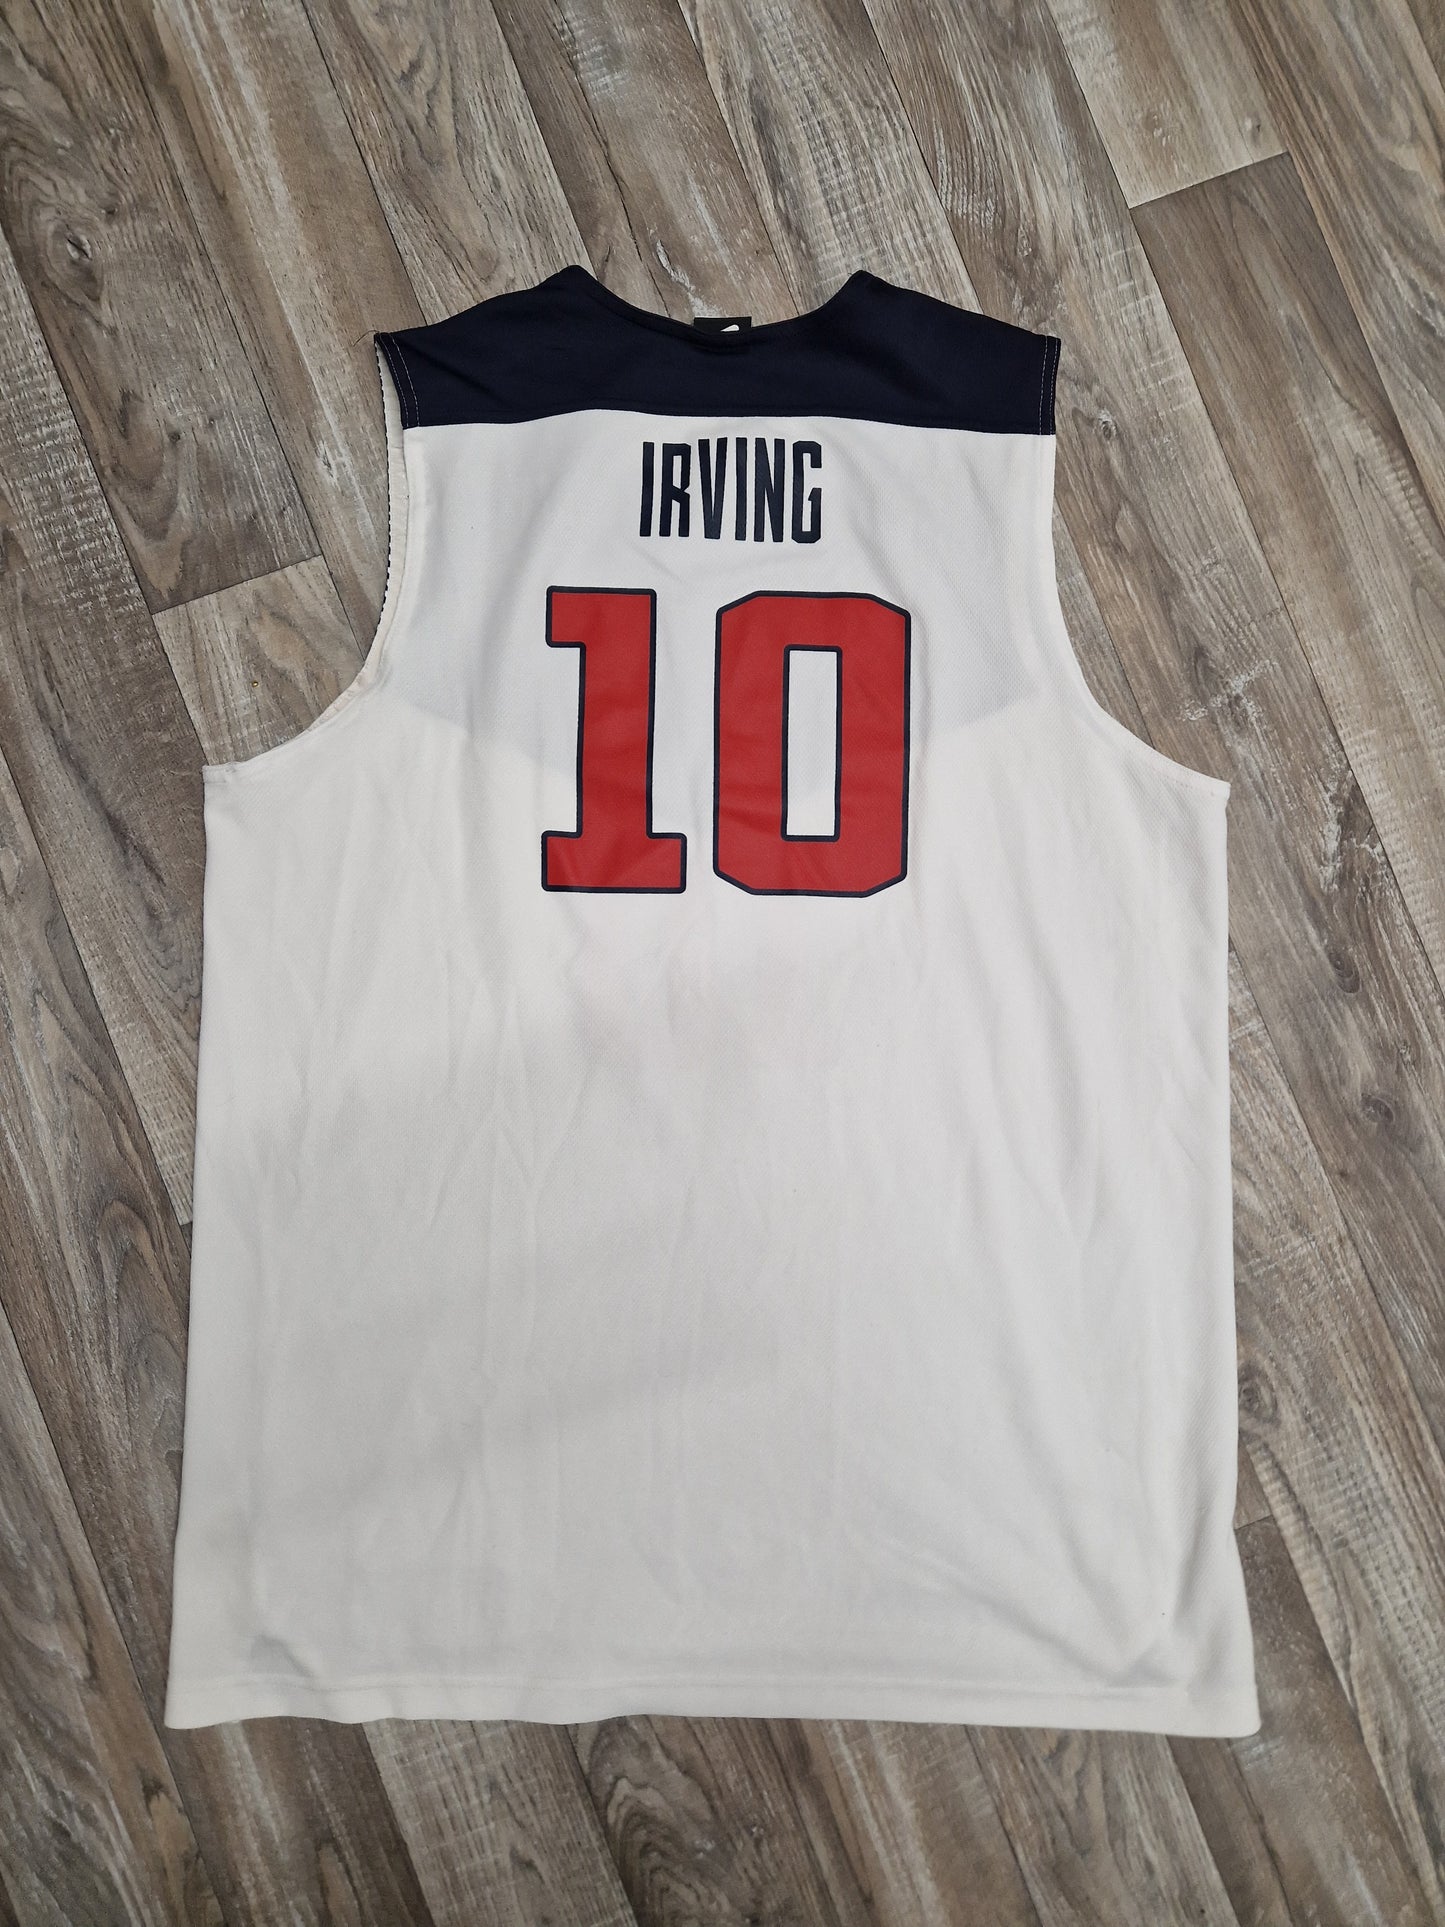 Kyrie Irving Team USA Jersey Size Medium